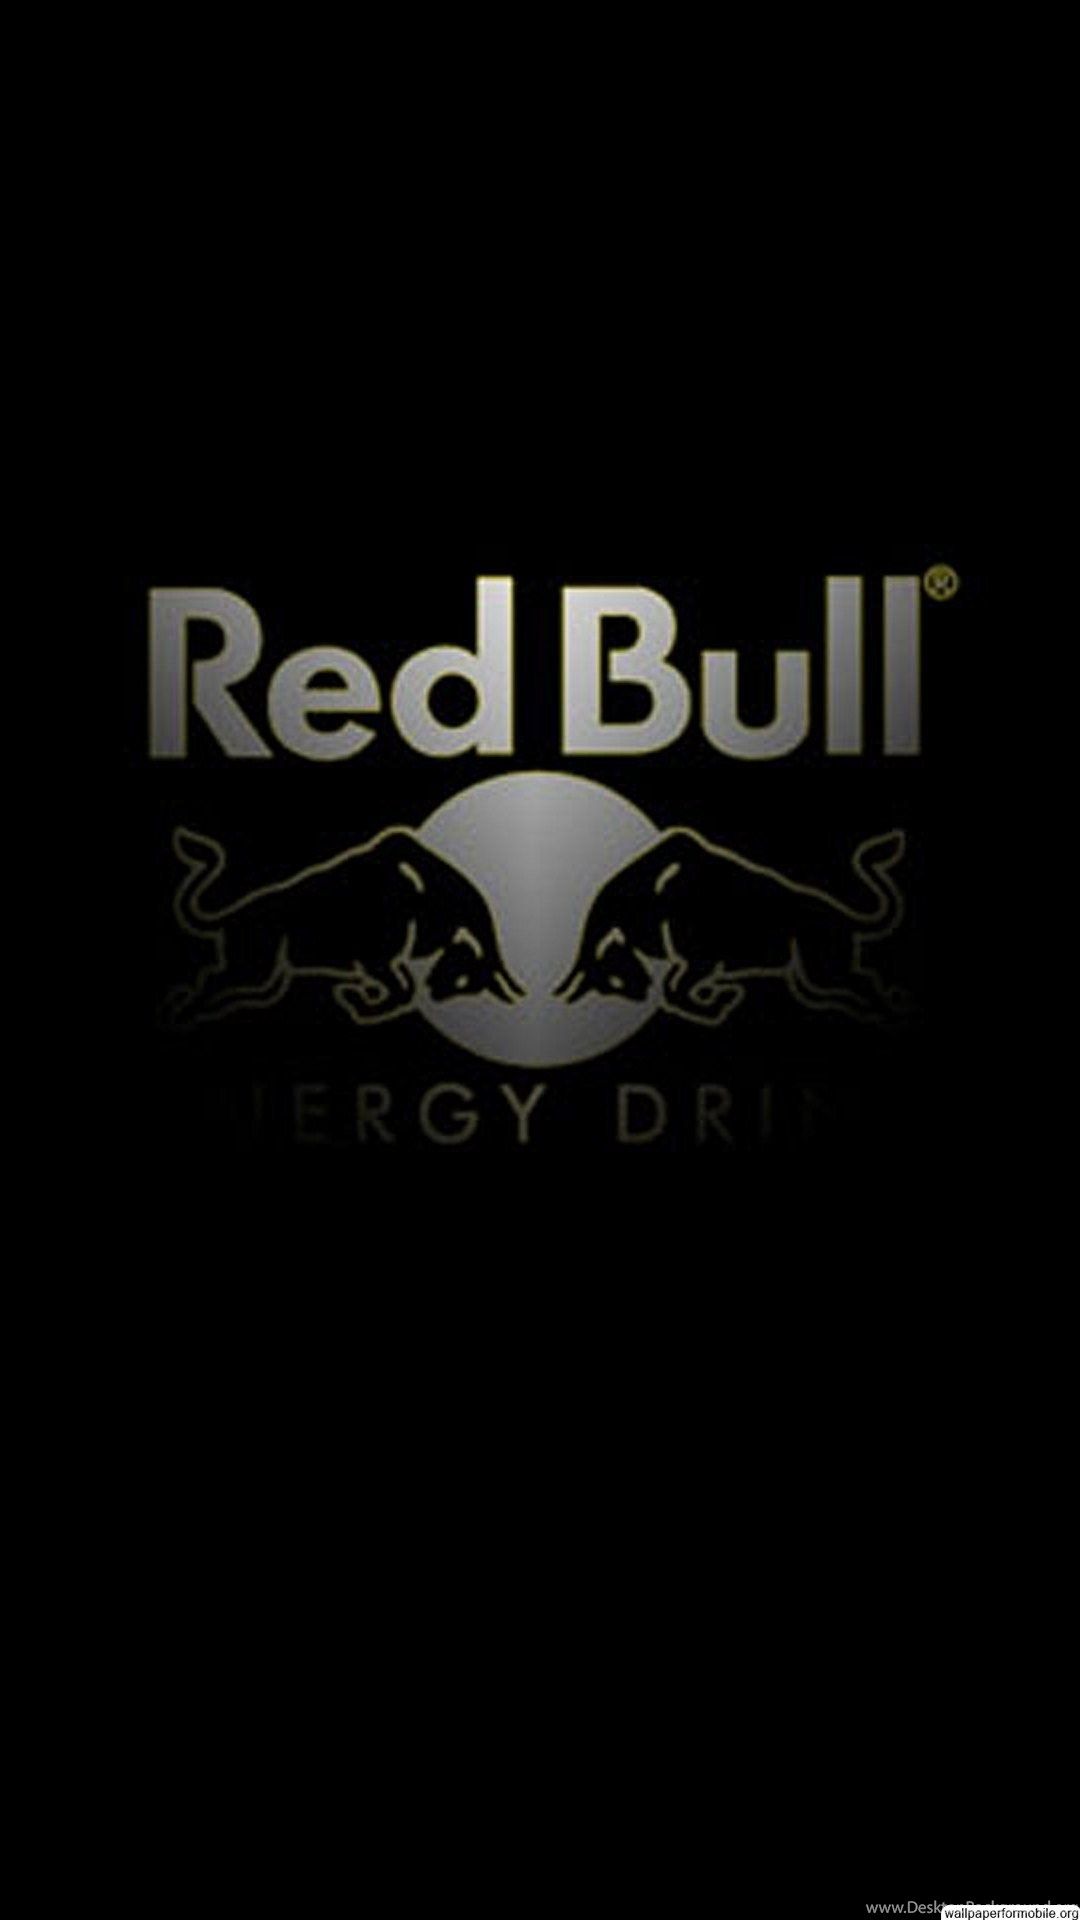 Red Bull iPhone Wallpaper HD .desktopbackground.org